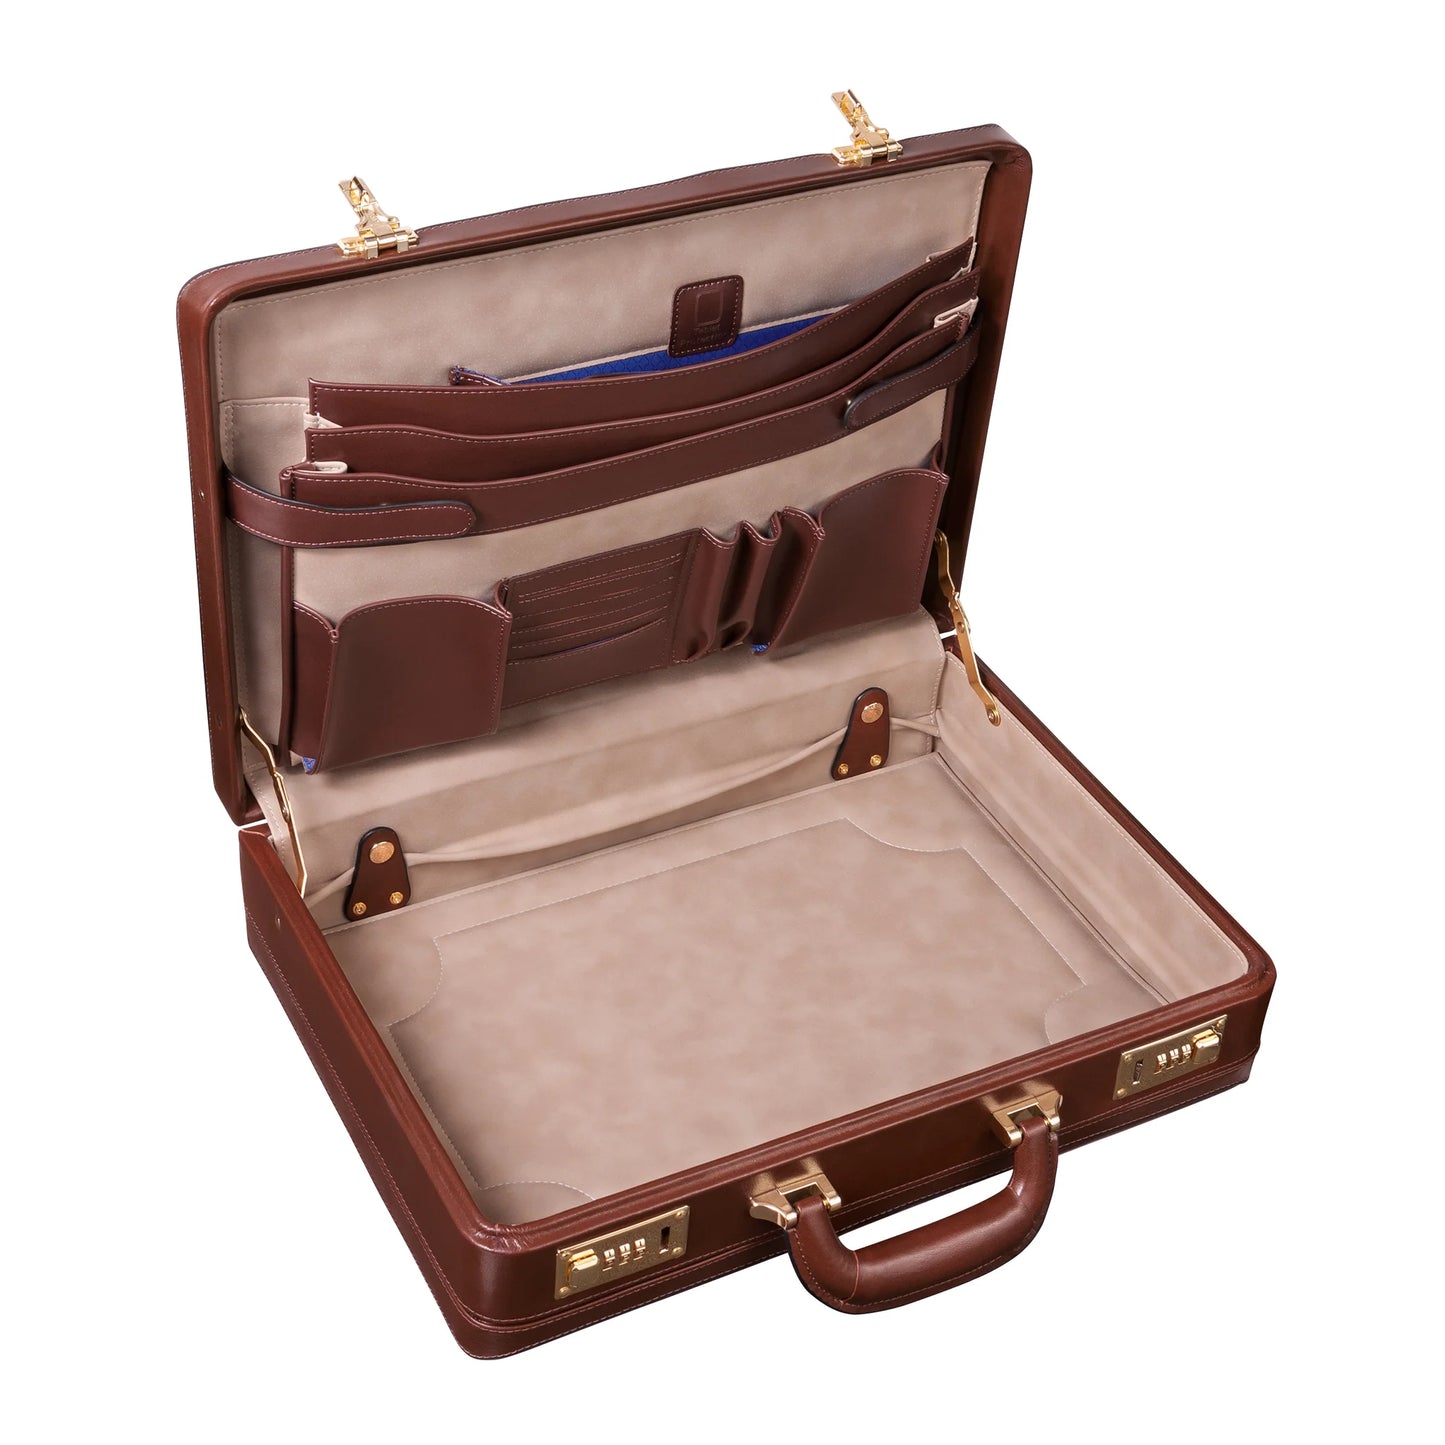 McKleinUSA TURNER | 4.5” Leather Expandable Attaché Briefcase